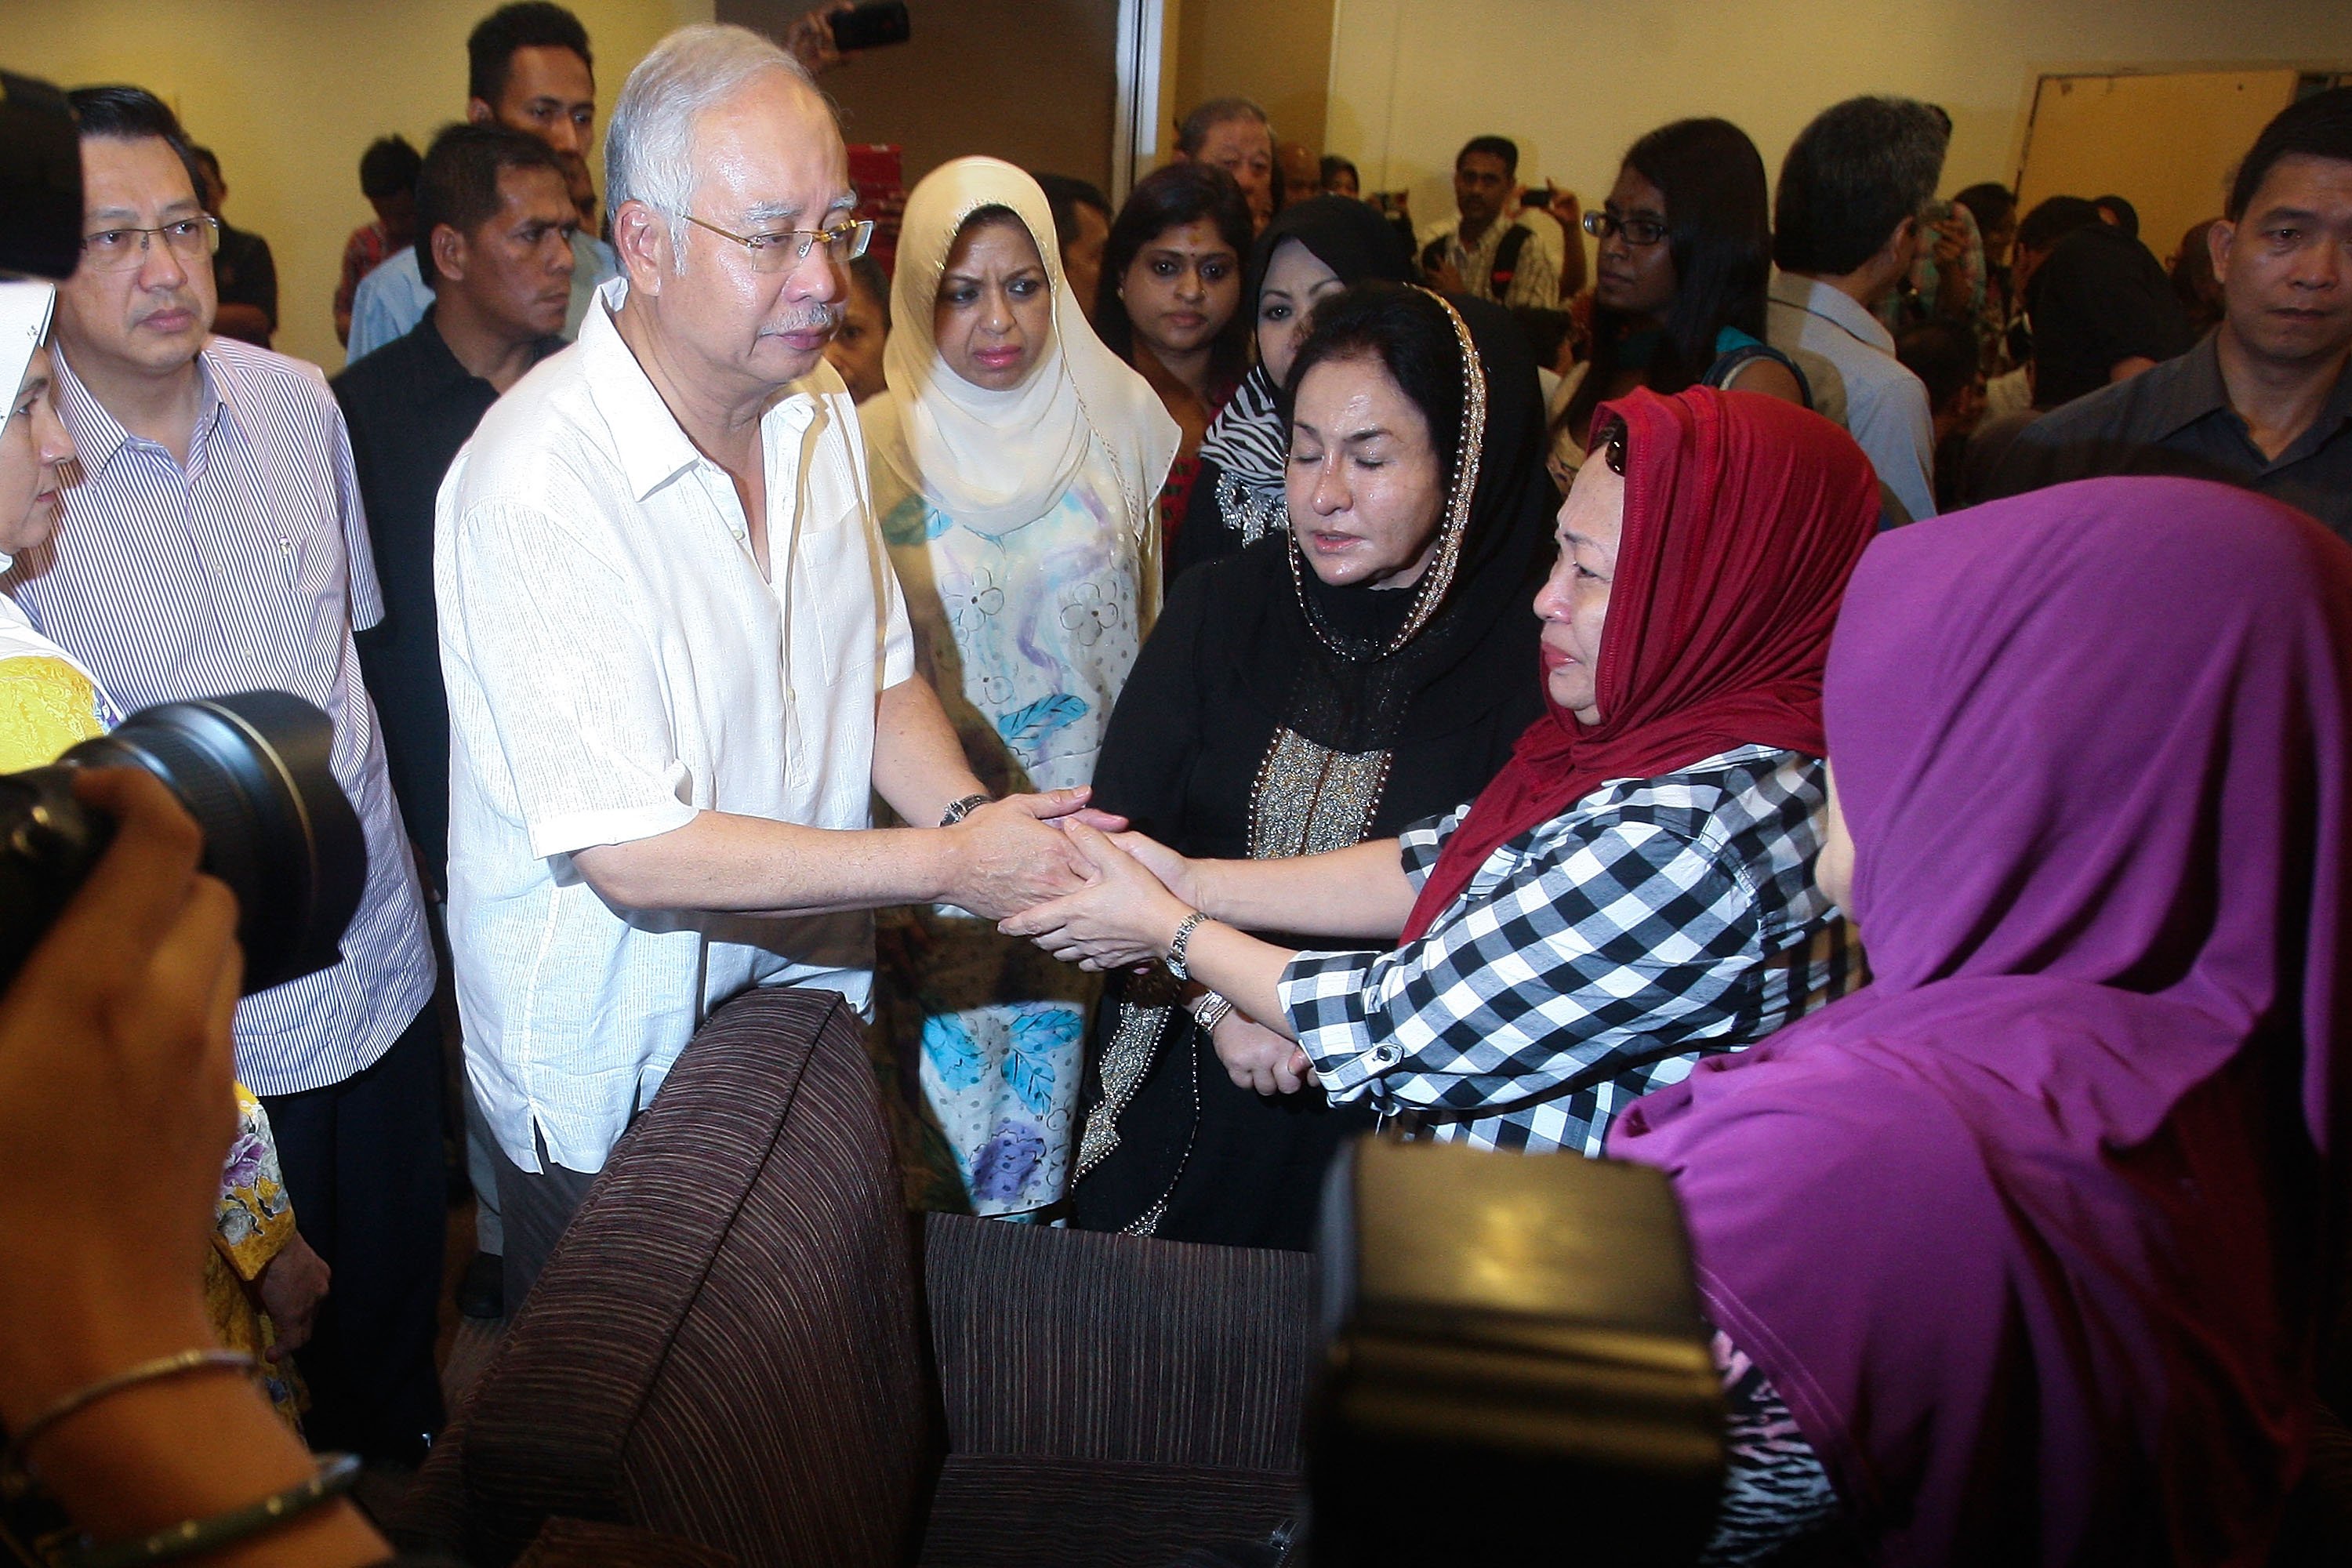 Malaysian Prime Minister Najib Razak and his wife Rosmah Mansor meet family members of the MH17 victim on July 19, 2014 in Kuala Lumpur, Malaysia. (Rahman Roslan—Getty Images)